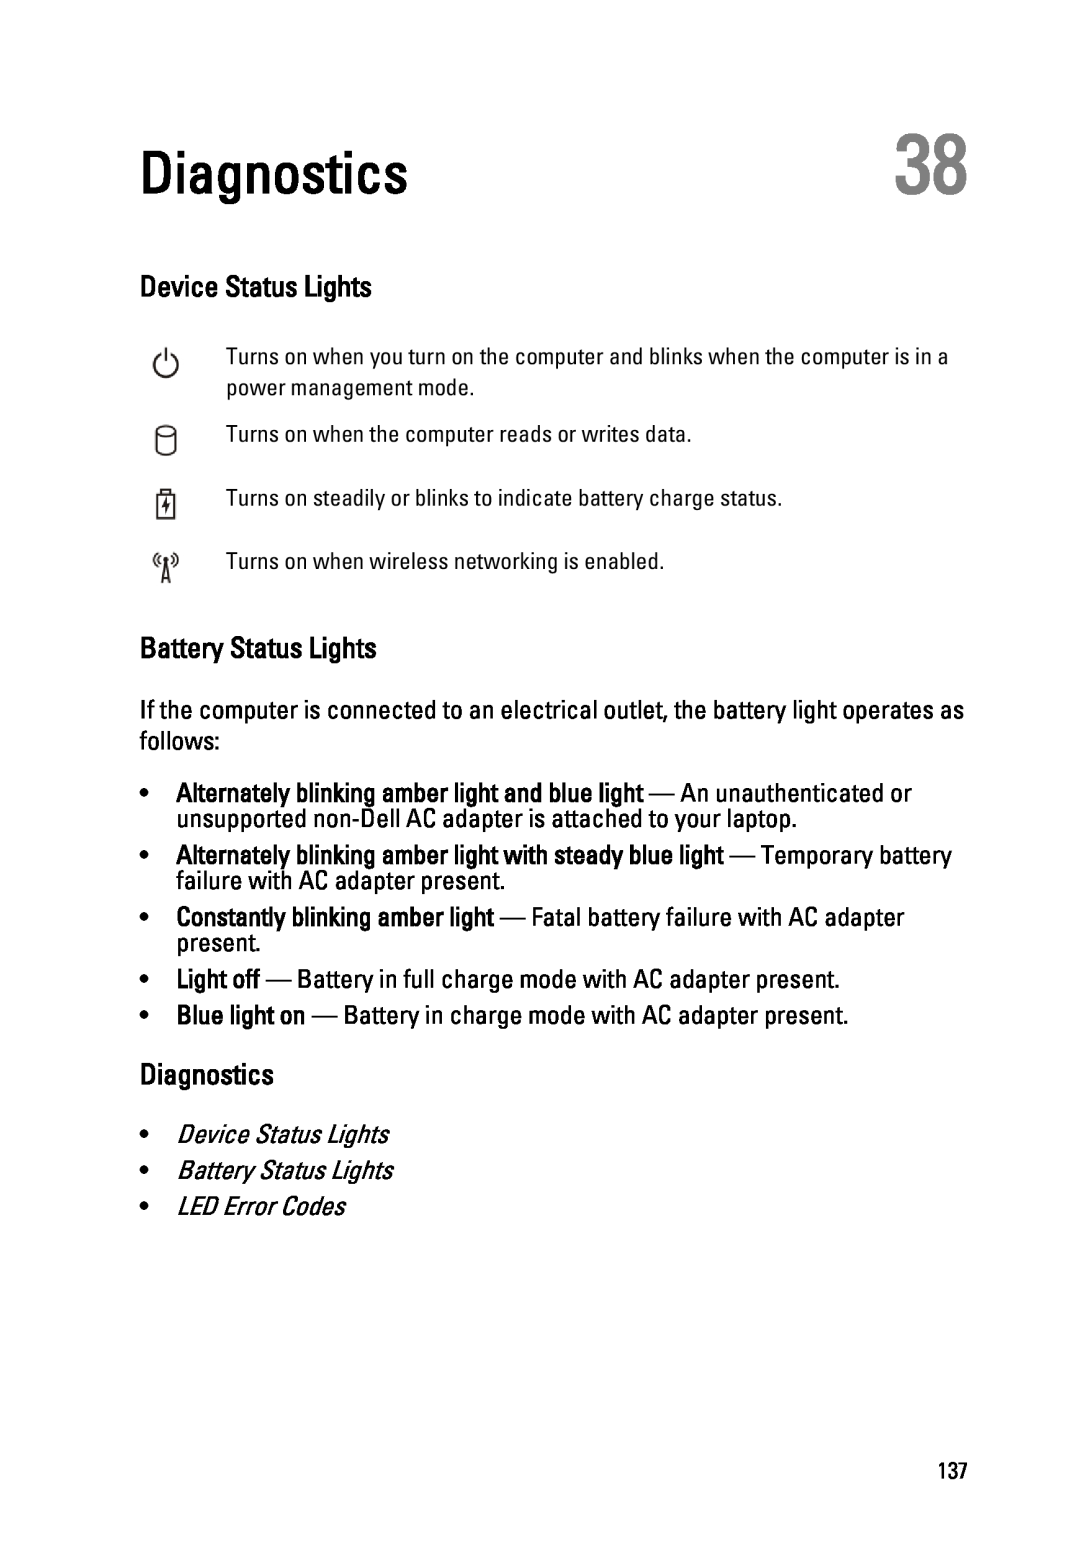 Dell M4600 owner manual Diagnostics38, Device Status Lights, Battery Status Lights 